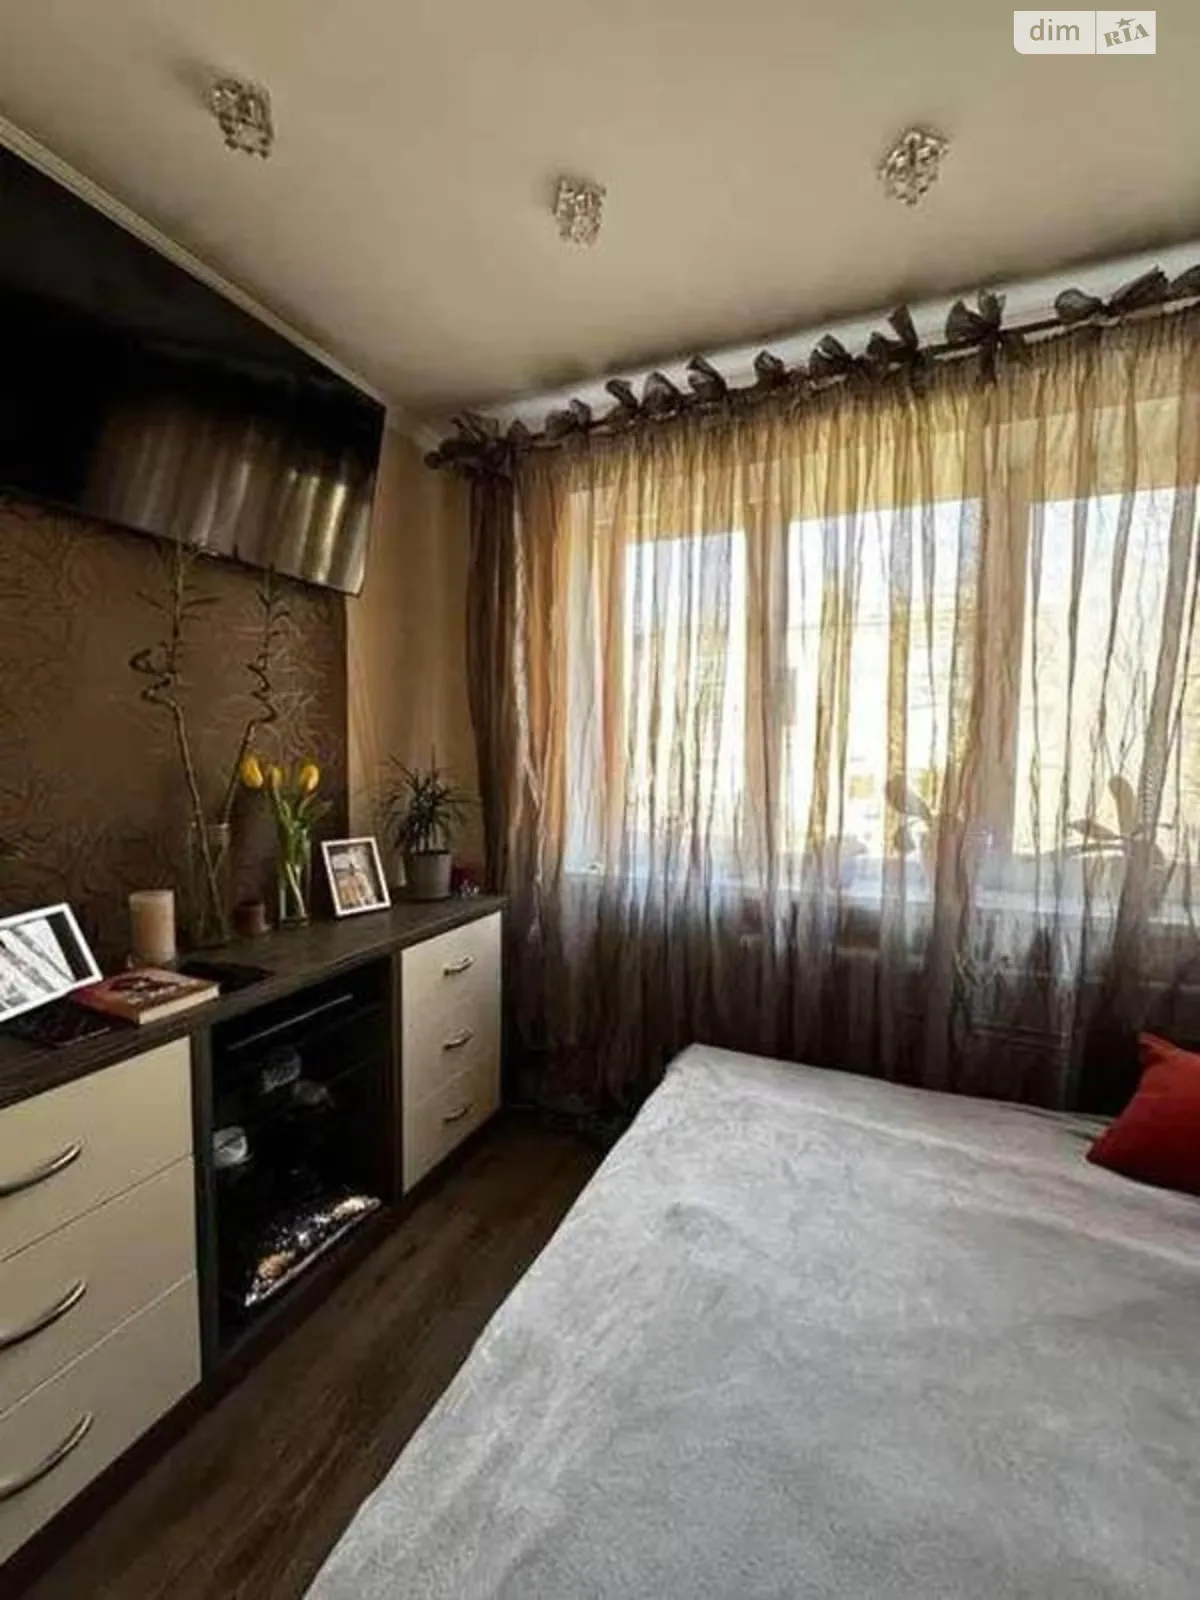 Продается комната 24 кв. м в Киеве, цена: 25000 $ - фото 1